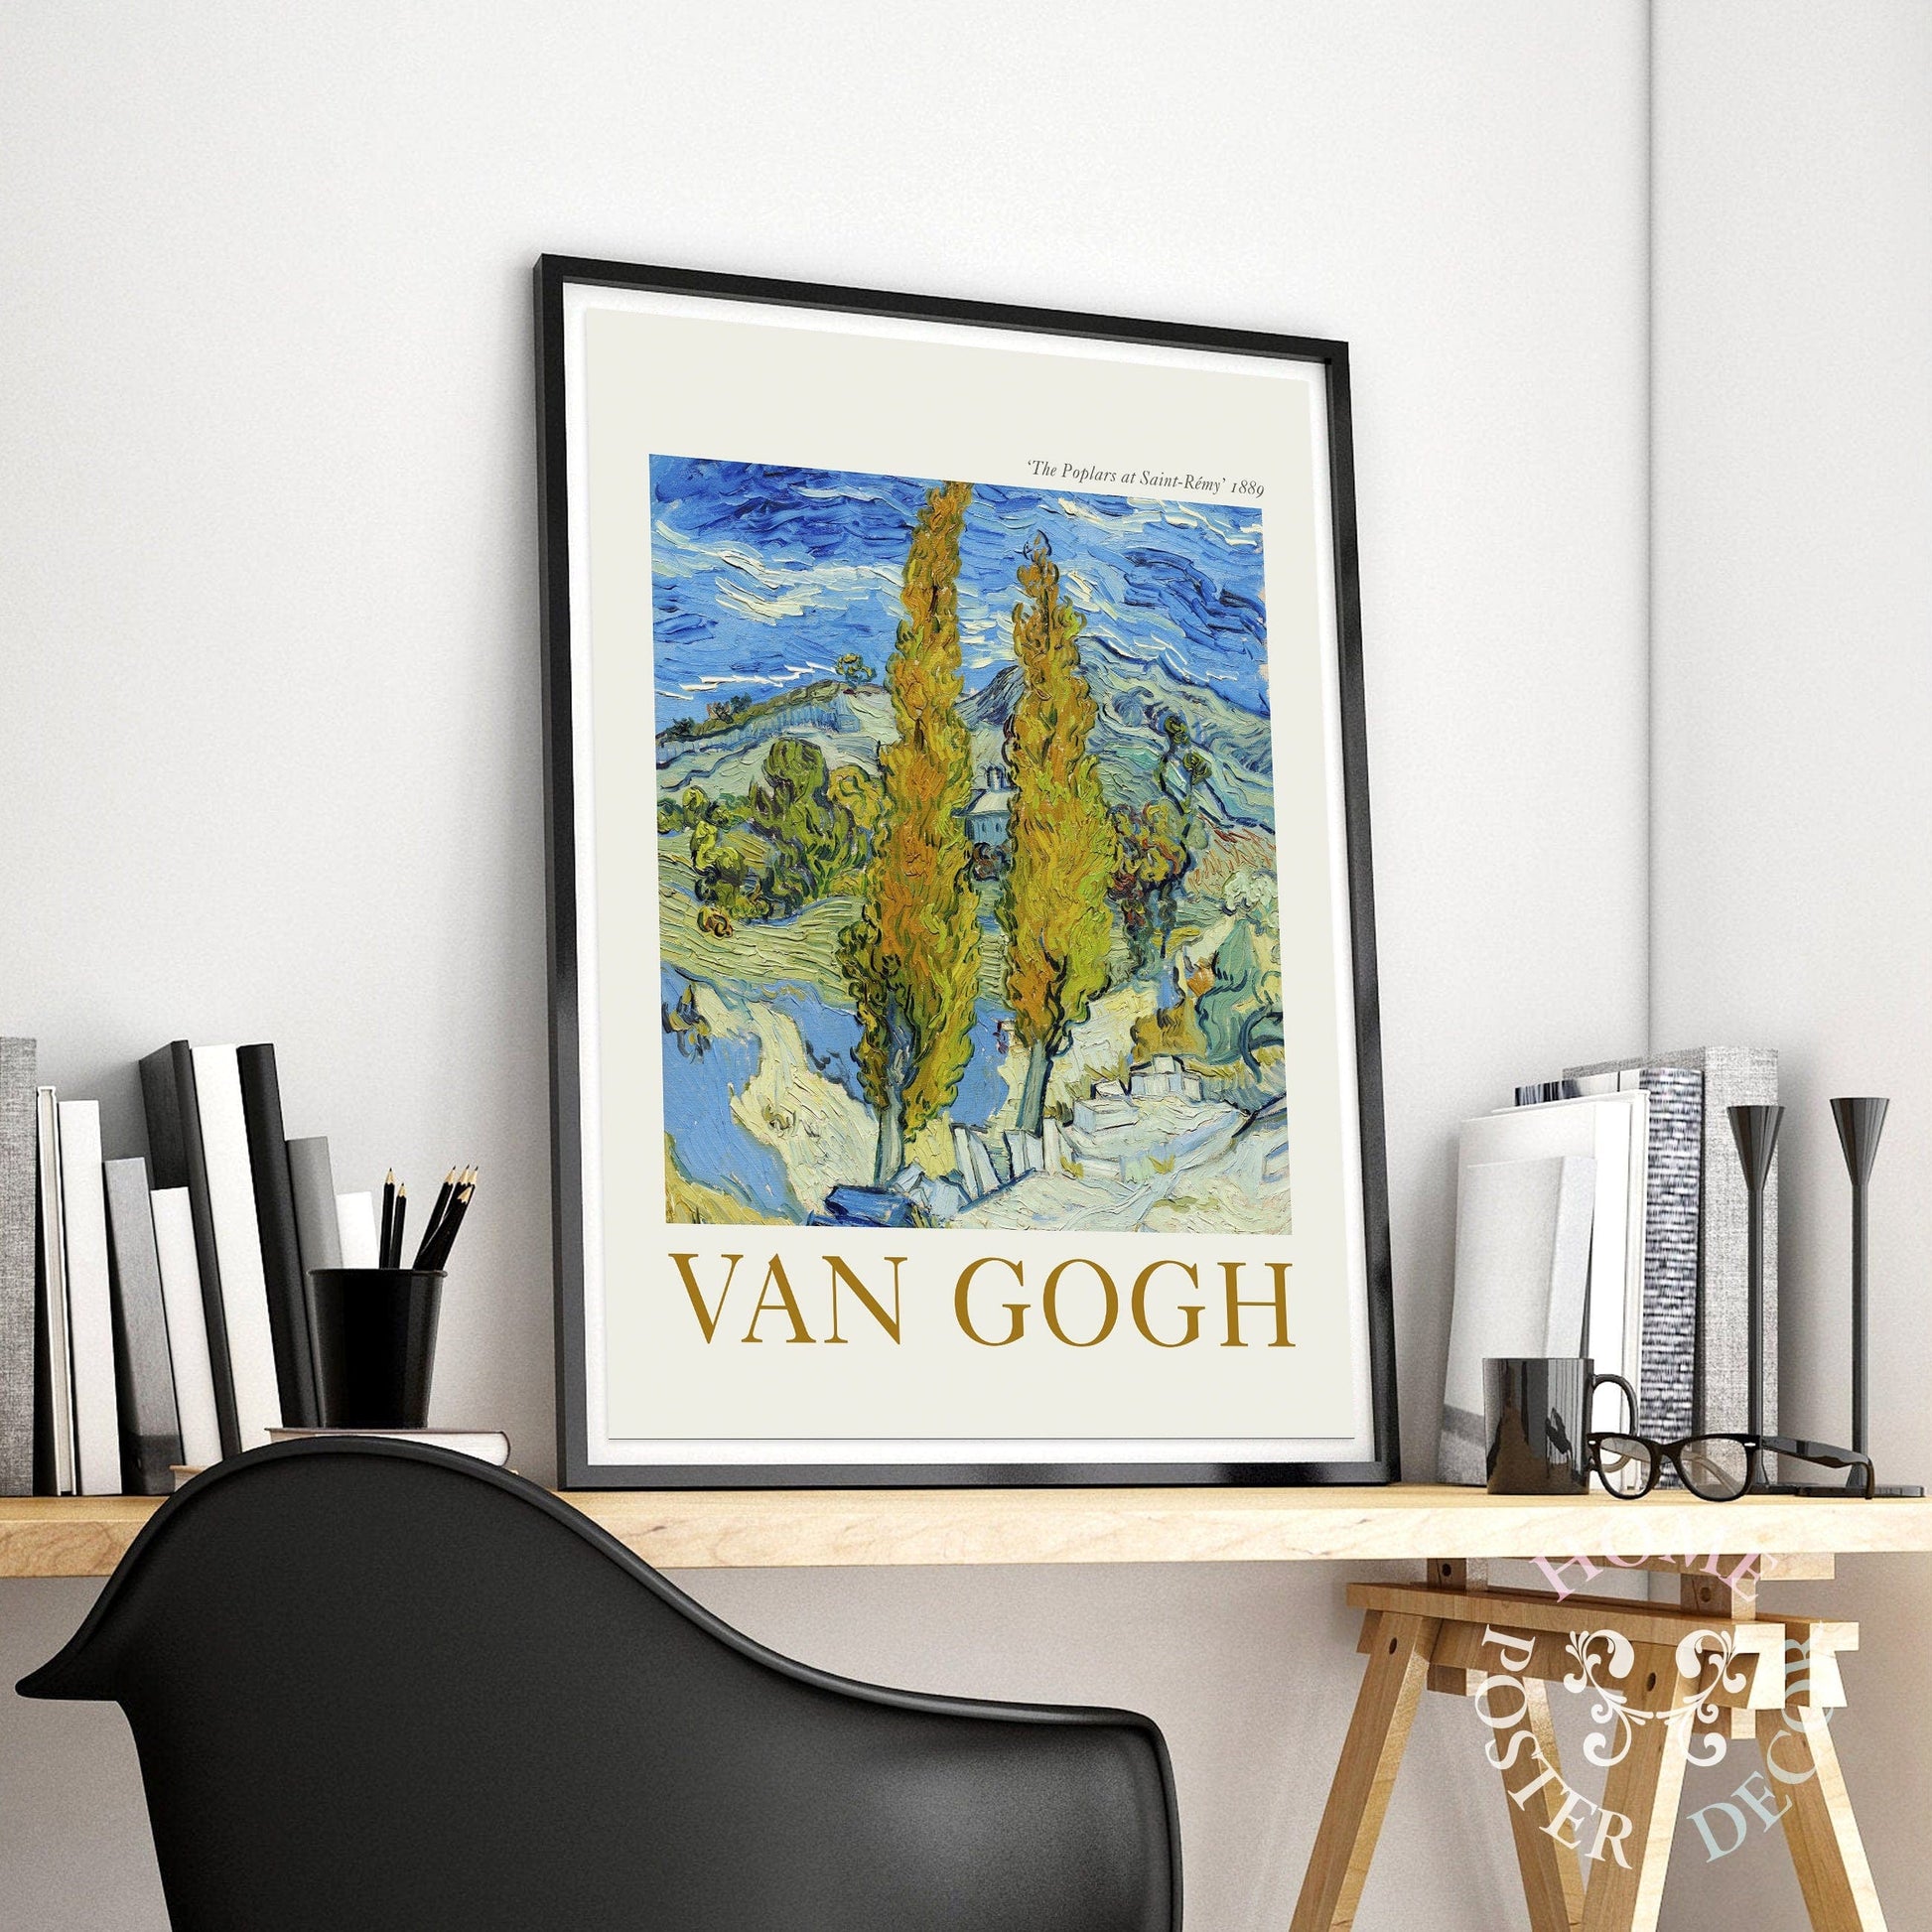 Home Poster Decor Single Van Gogh Art, The Poplars, Tree Landscape, Living Room Wall Art